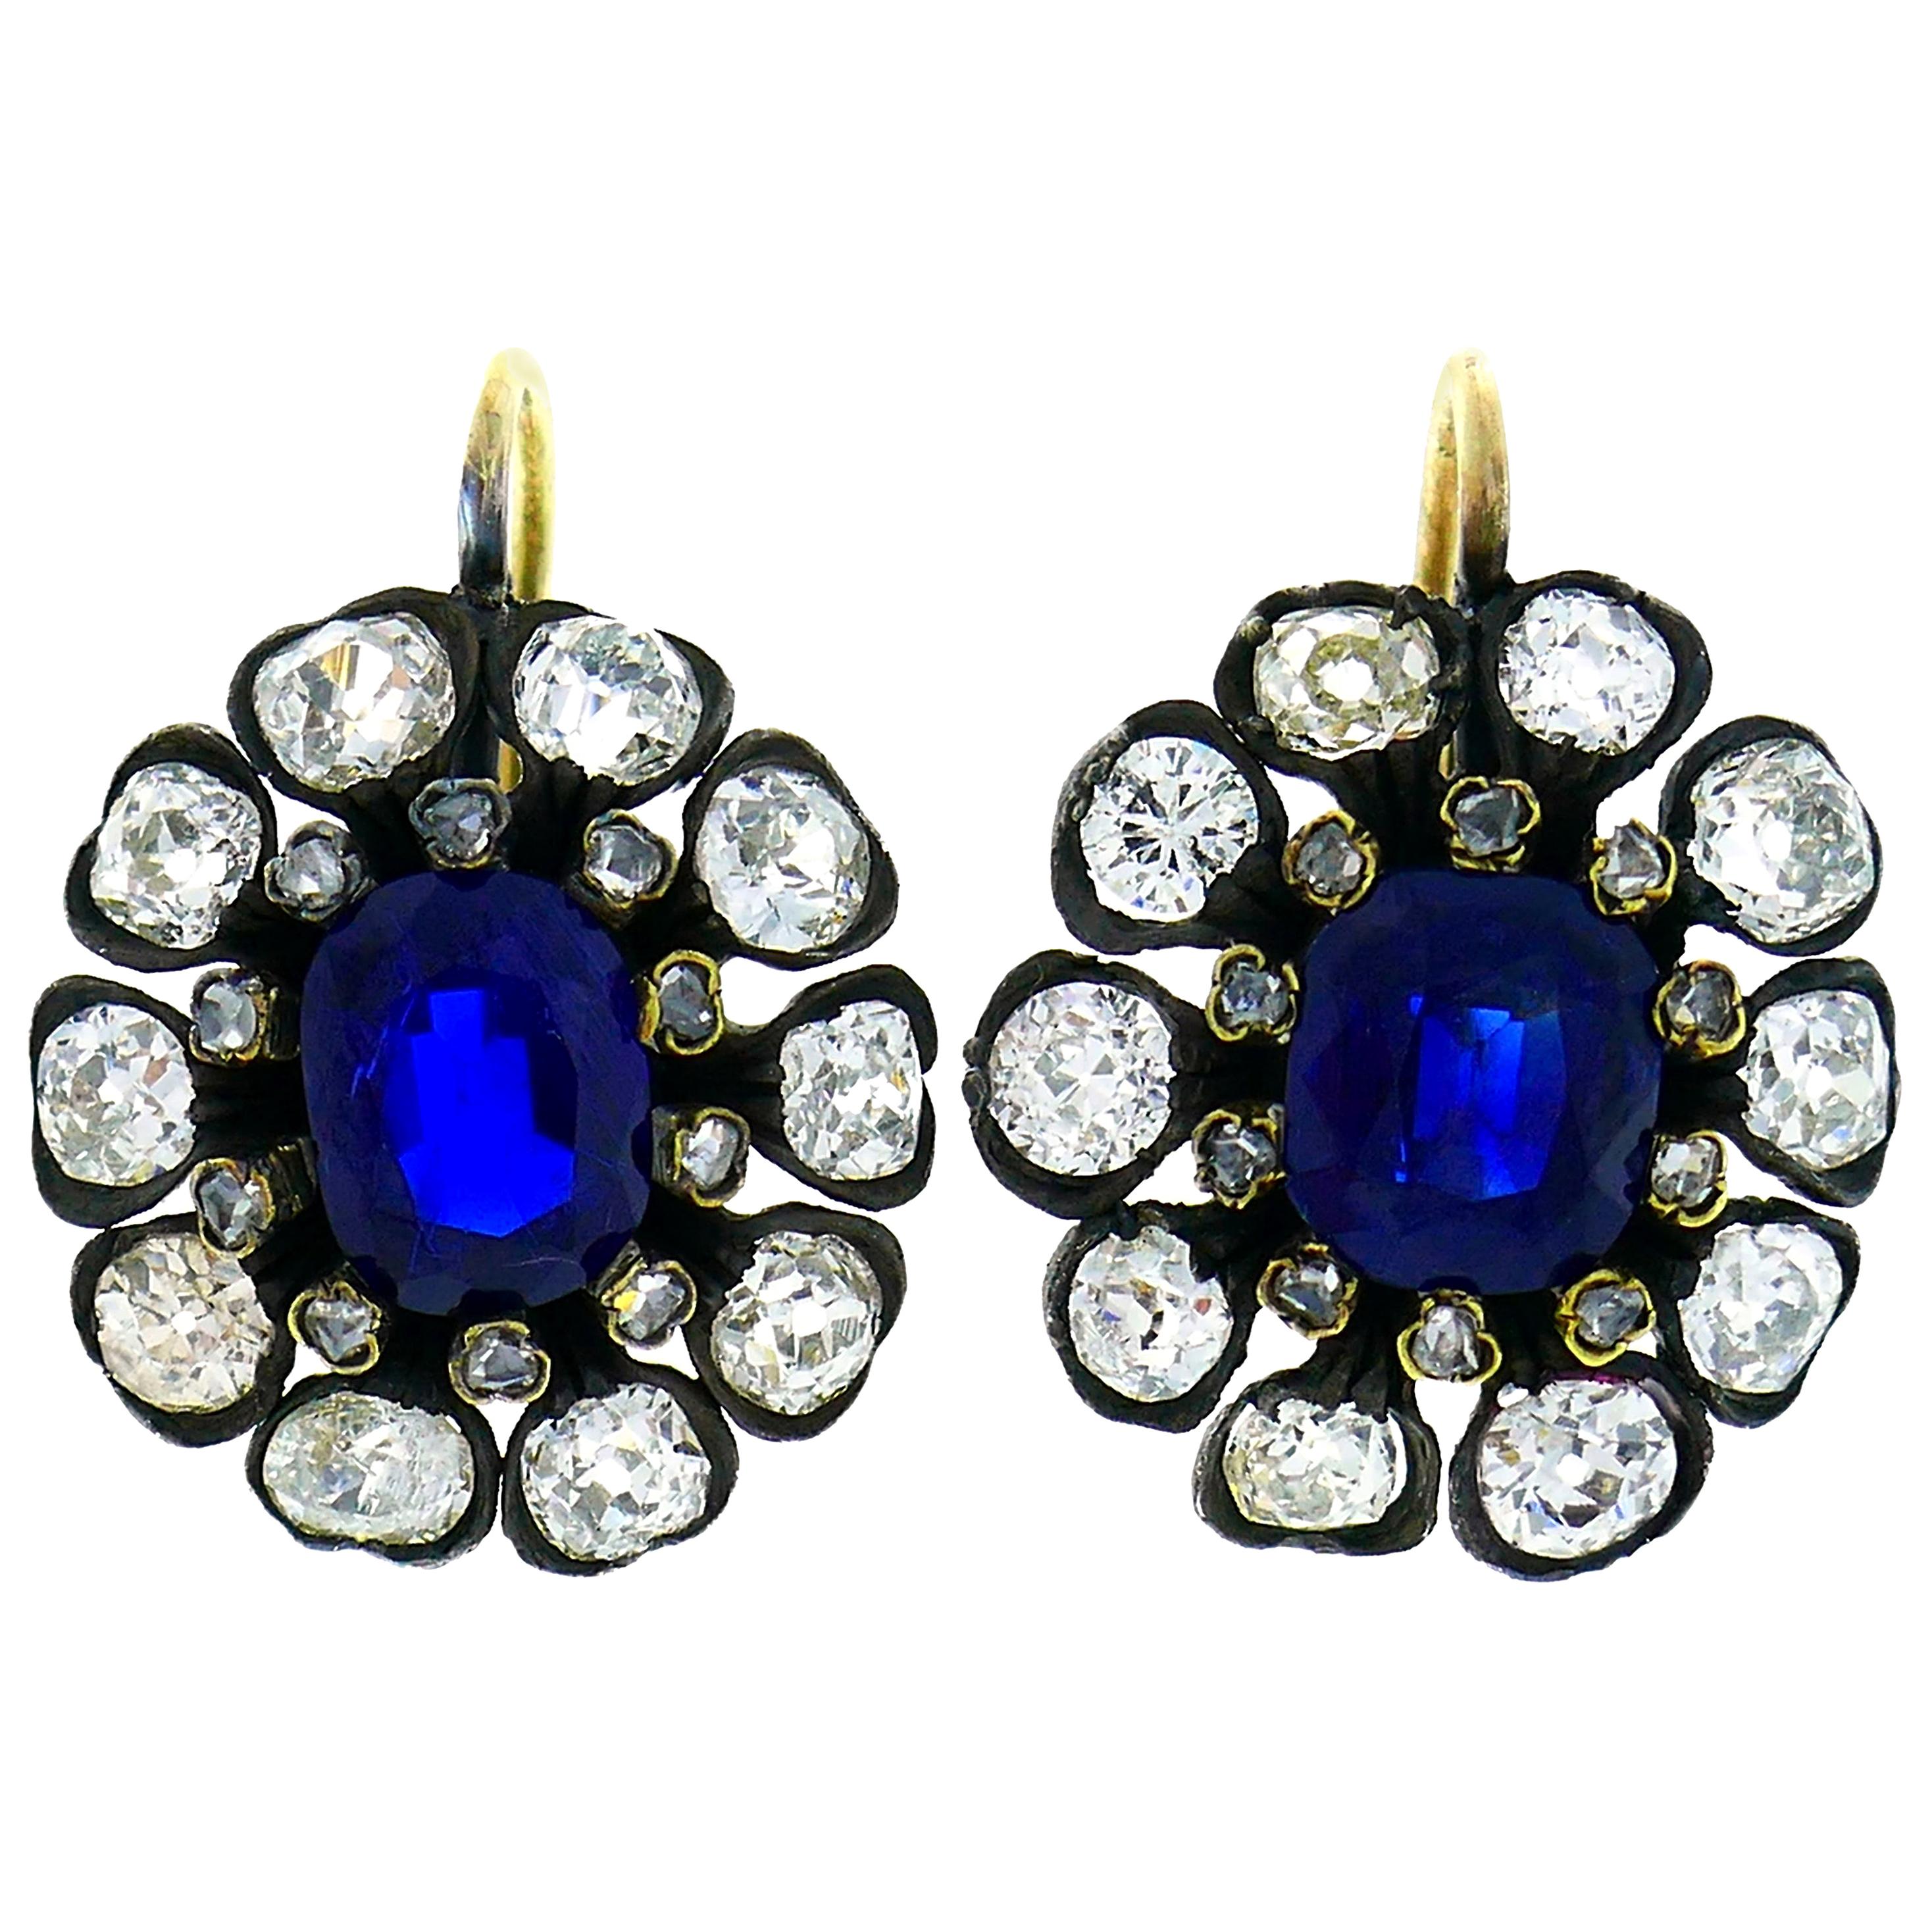 Antique Sapphire Diamond Gold Cluster Earrings